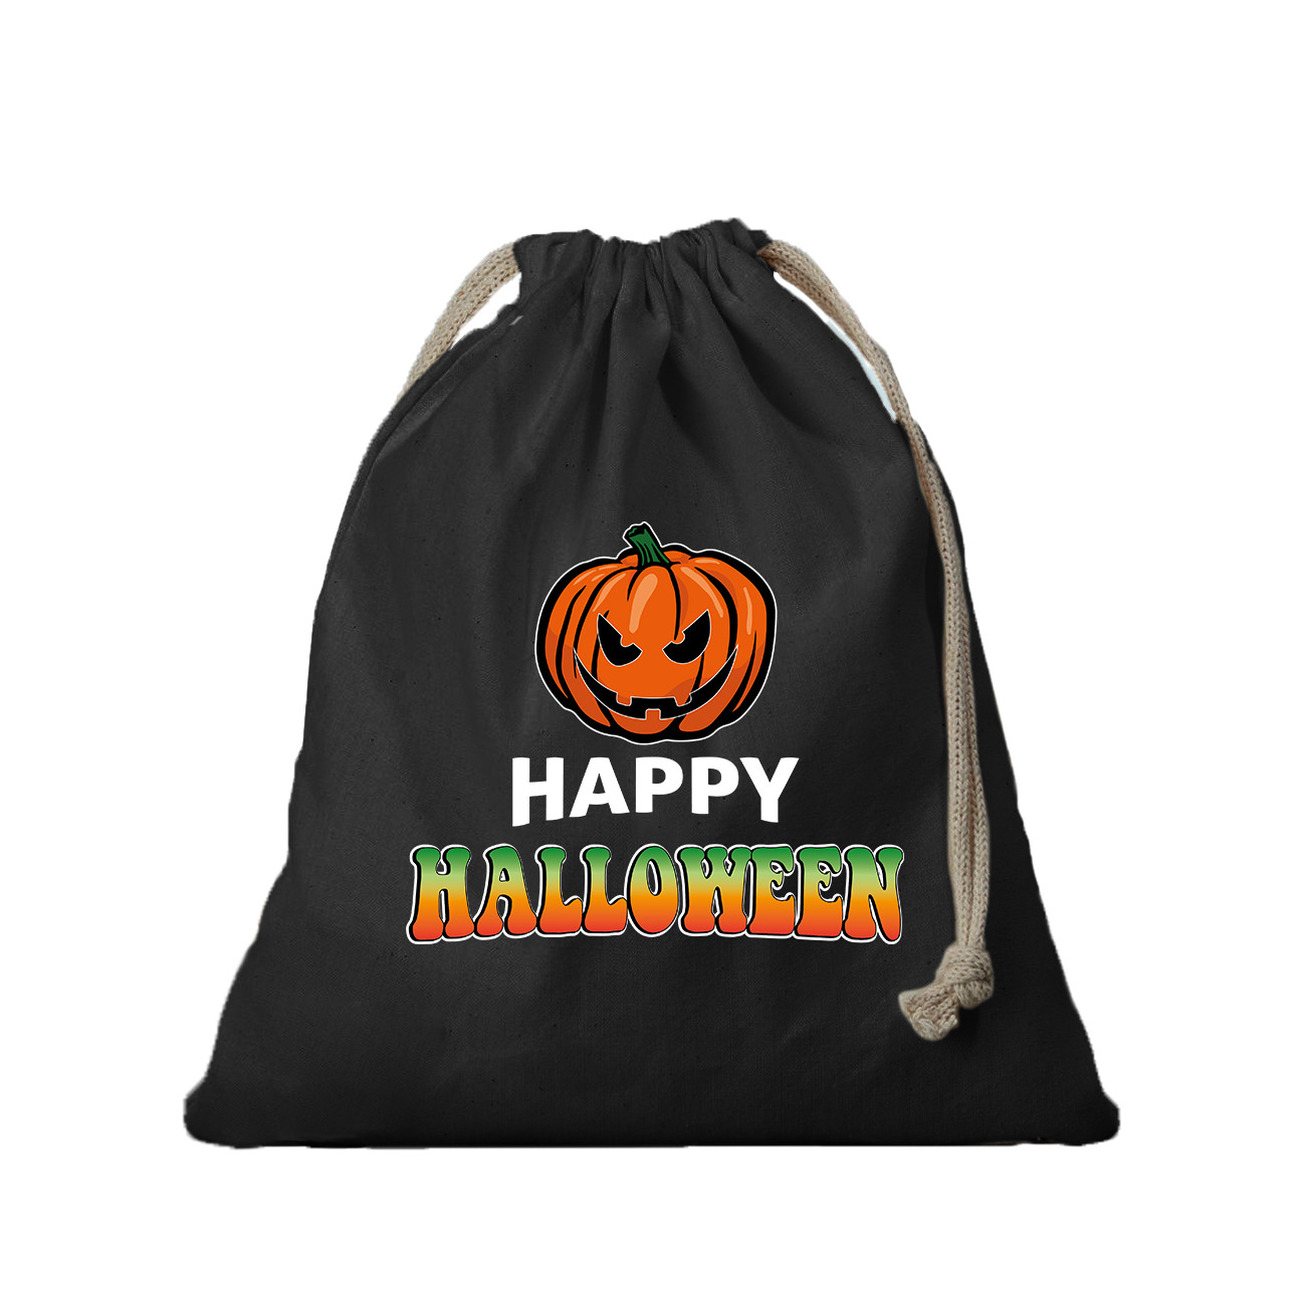 Halloween - 6x Pompoen / happy halloween canvas snoep tasje/ snoepzakje zwart met koord 25 x 30 cm